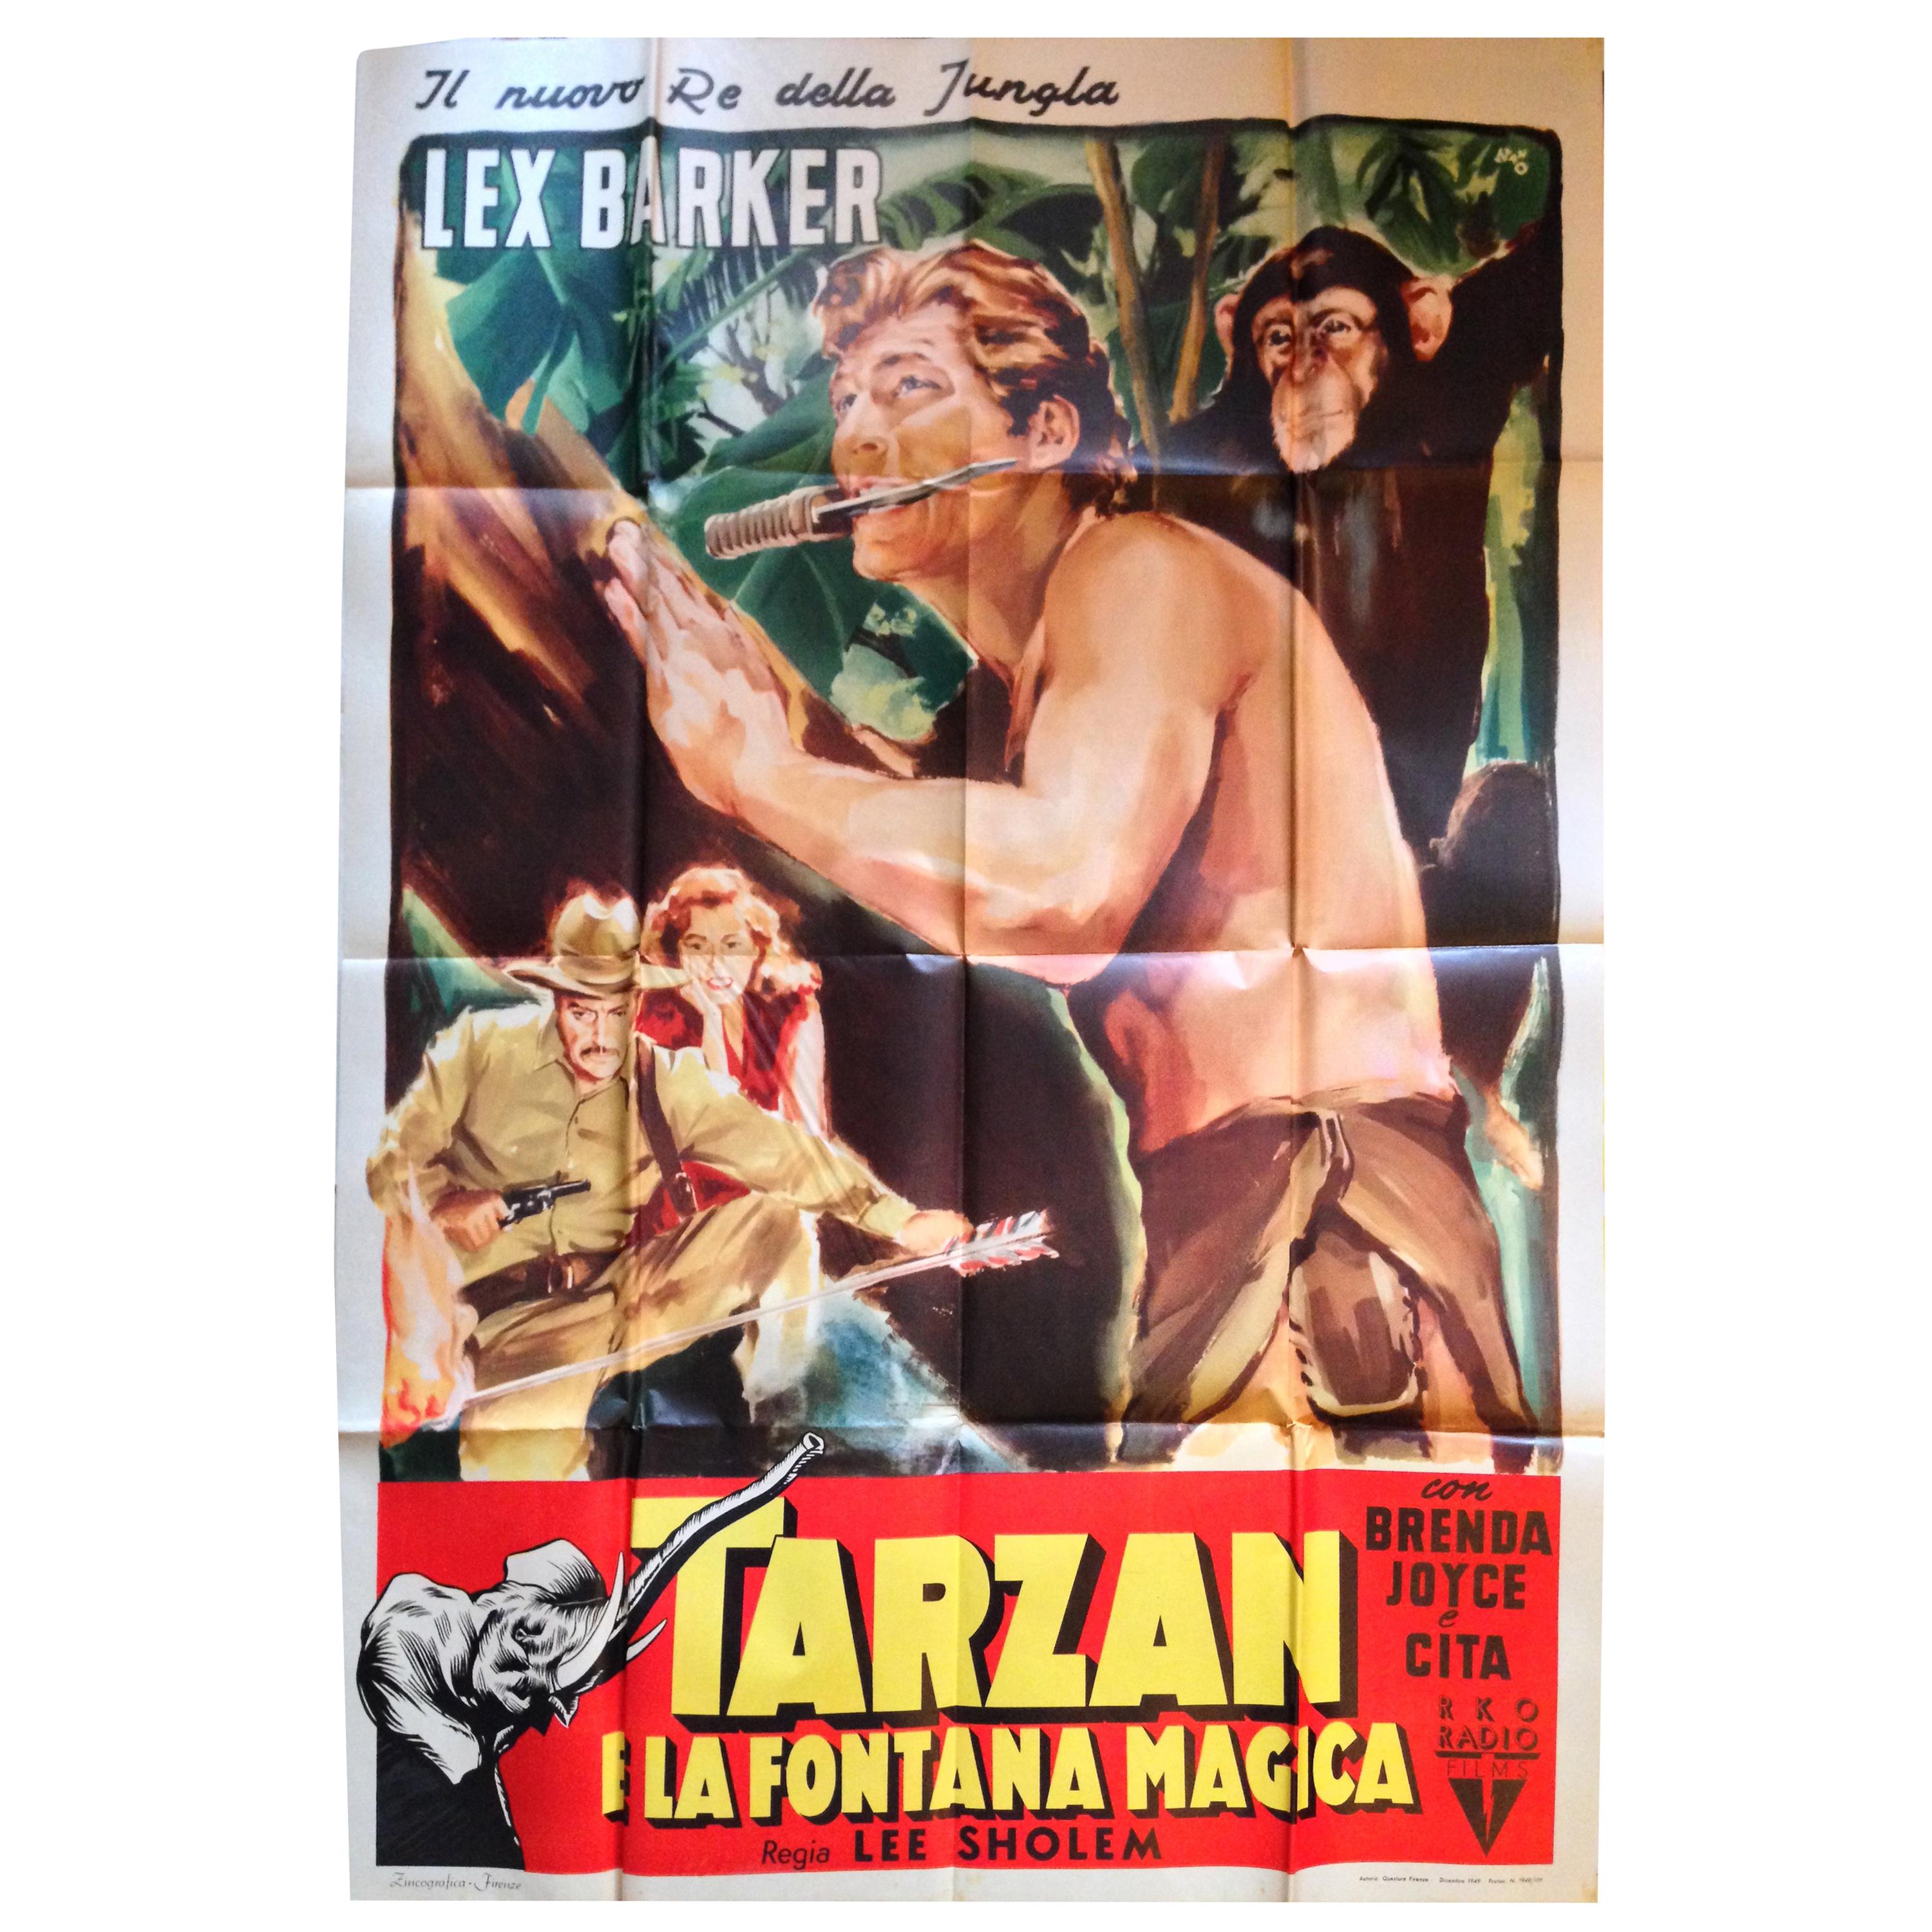 Tarzan Fontana Magica Re Jungla Sholem Barker Joyce Cita Film Manifesto Original For Sale